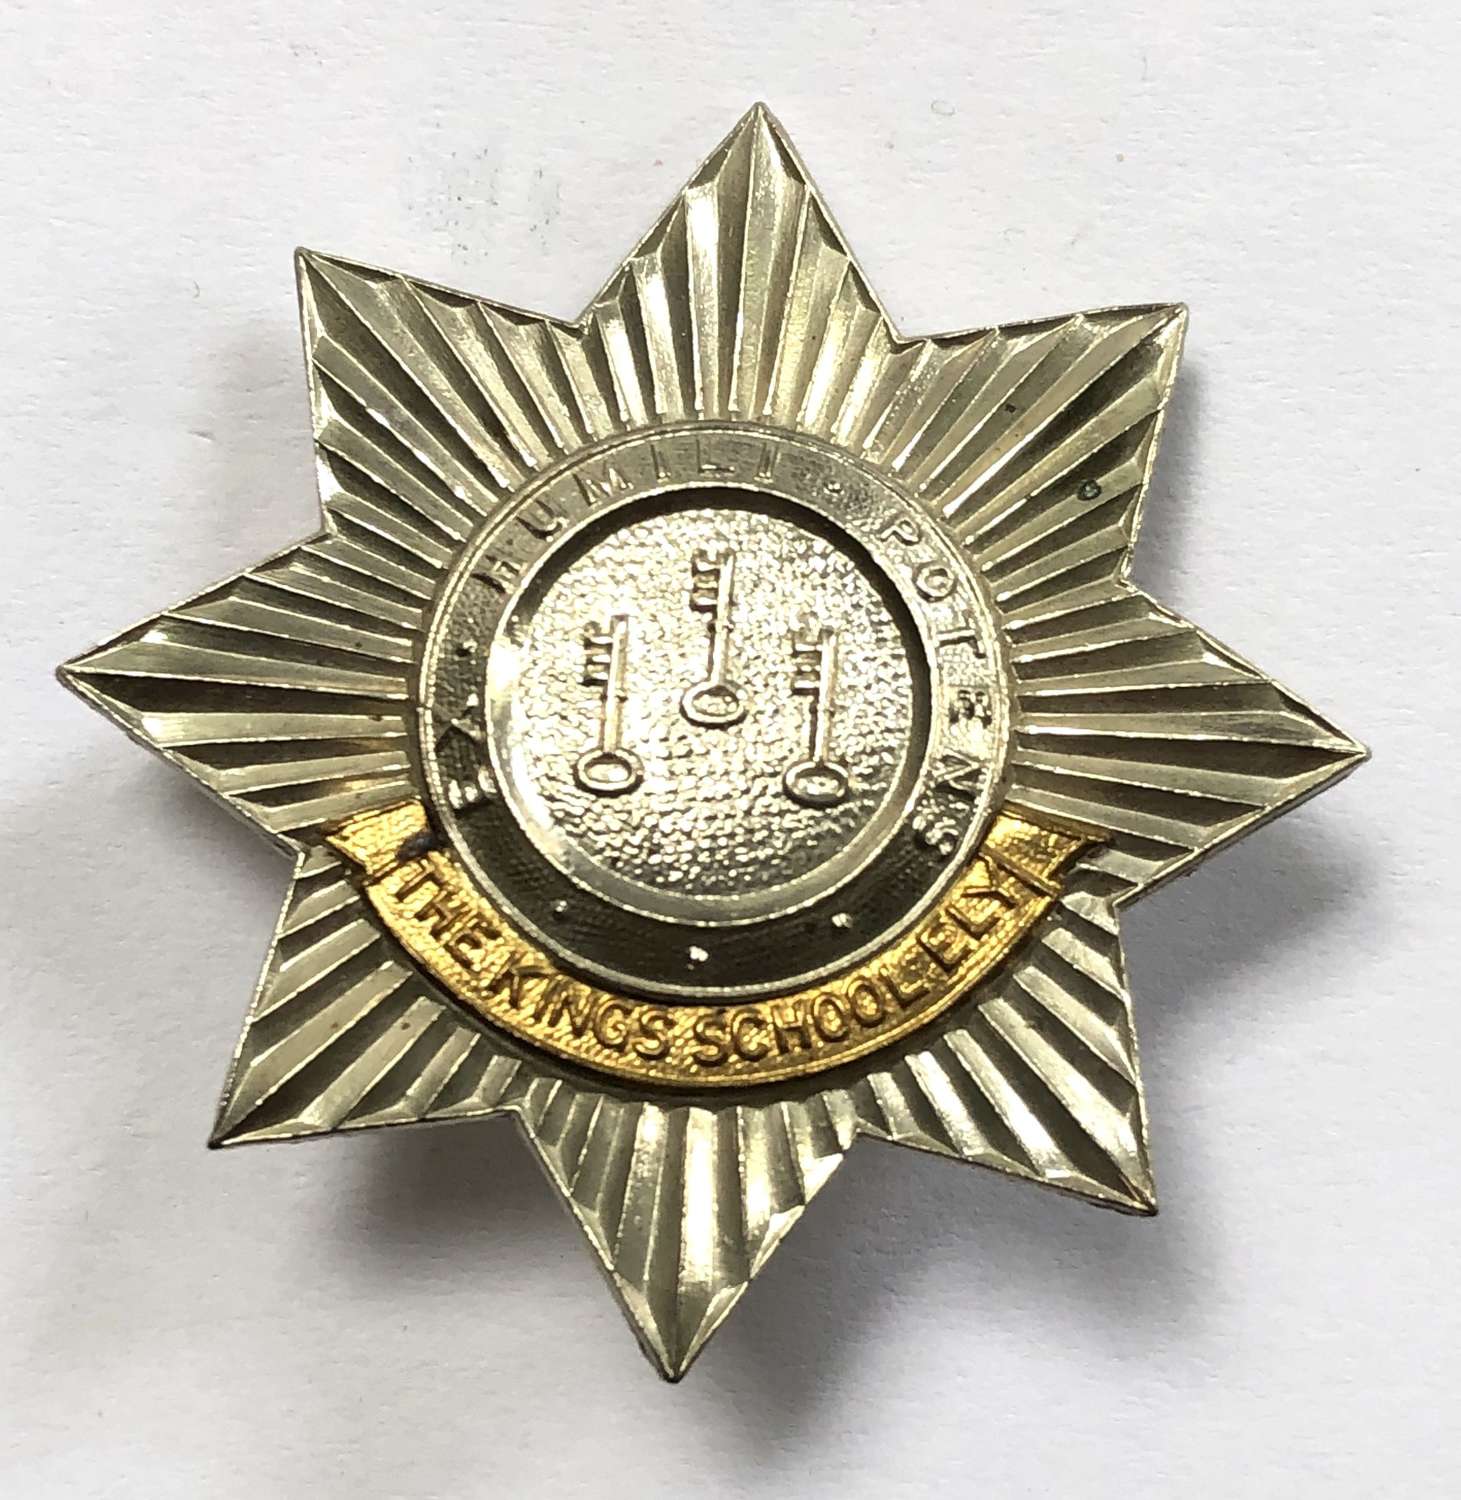 King's School Ely OTC/CCF cap badge